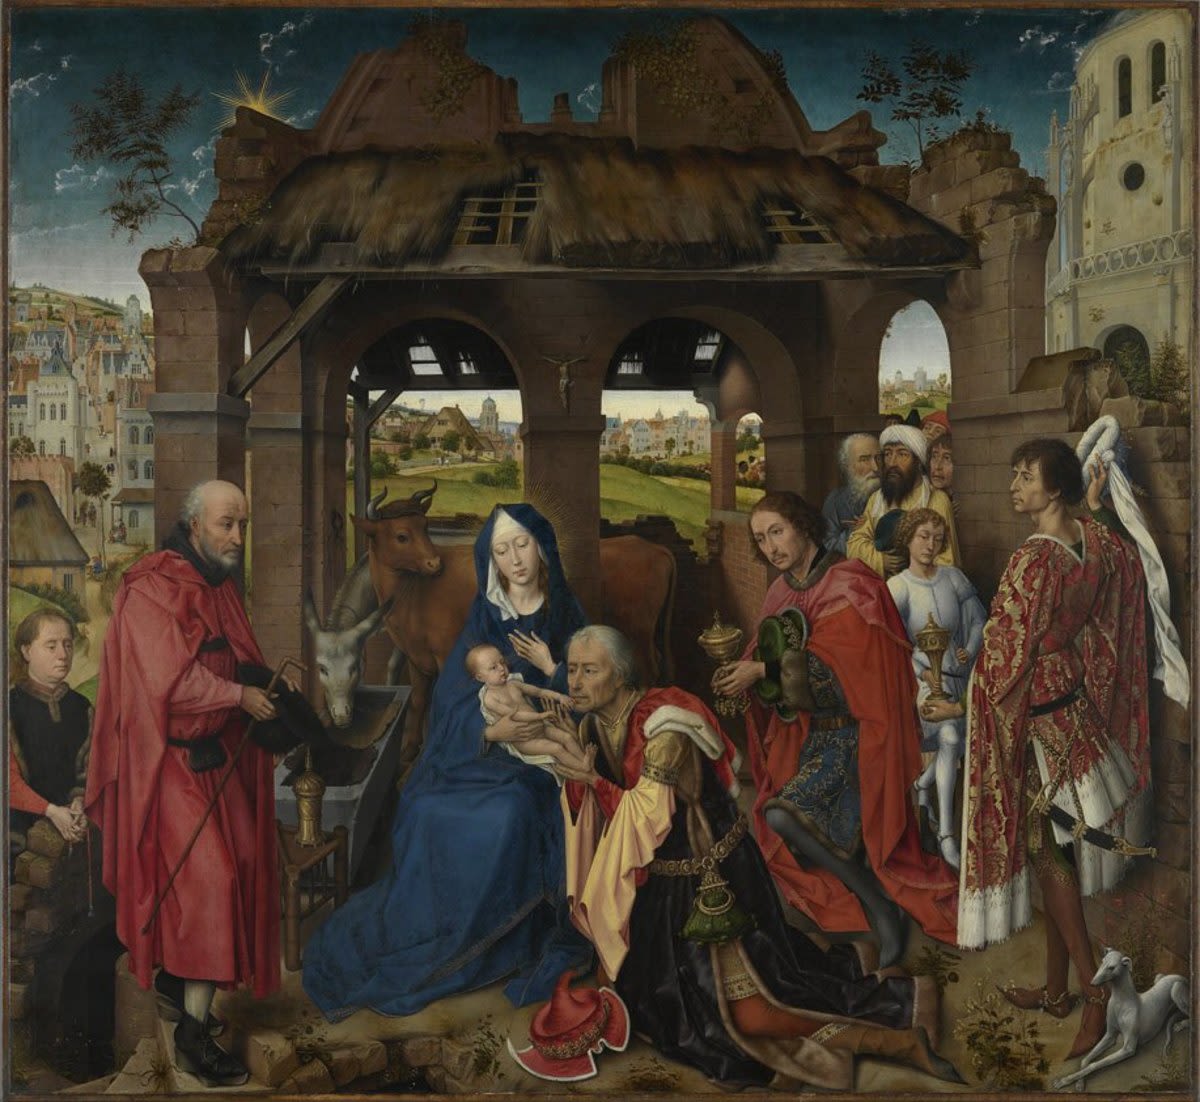 Visitation of the Magi (1455) by Rogier van der Weyden - Public Domain Bible Painting